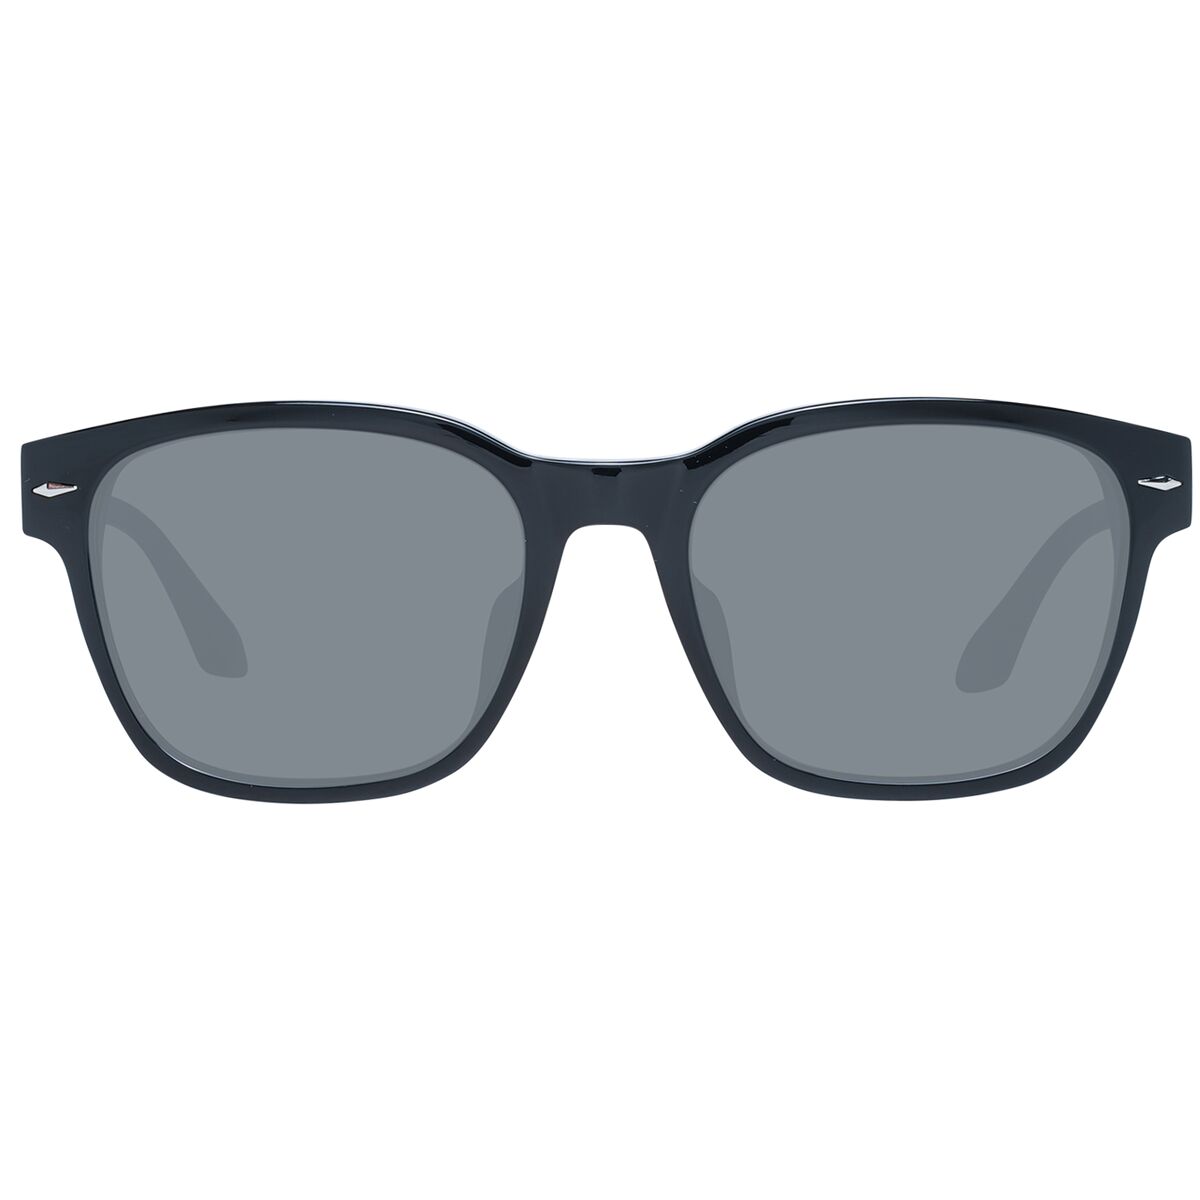 Herrensonnenbrille Longines LG0015-H 5601A